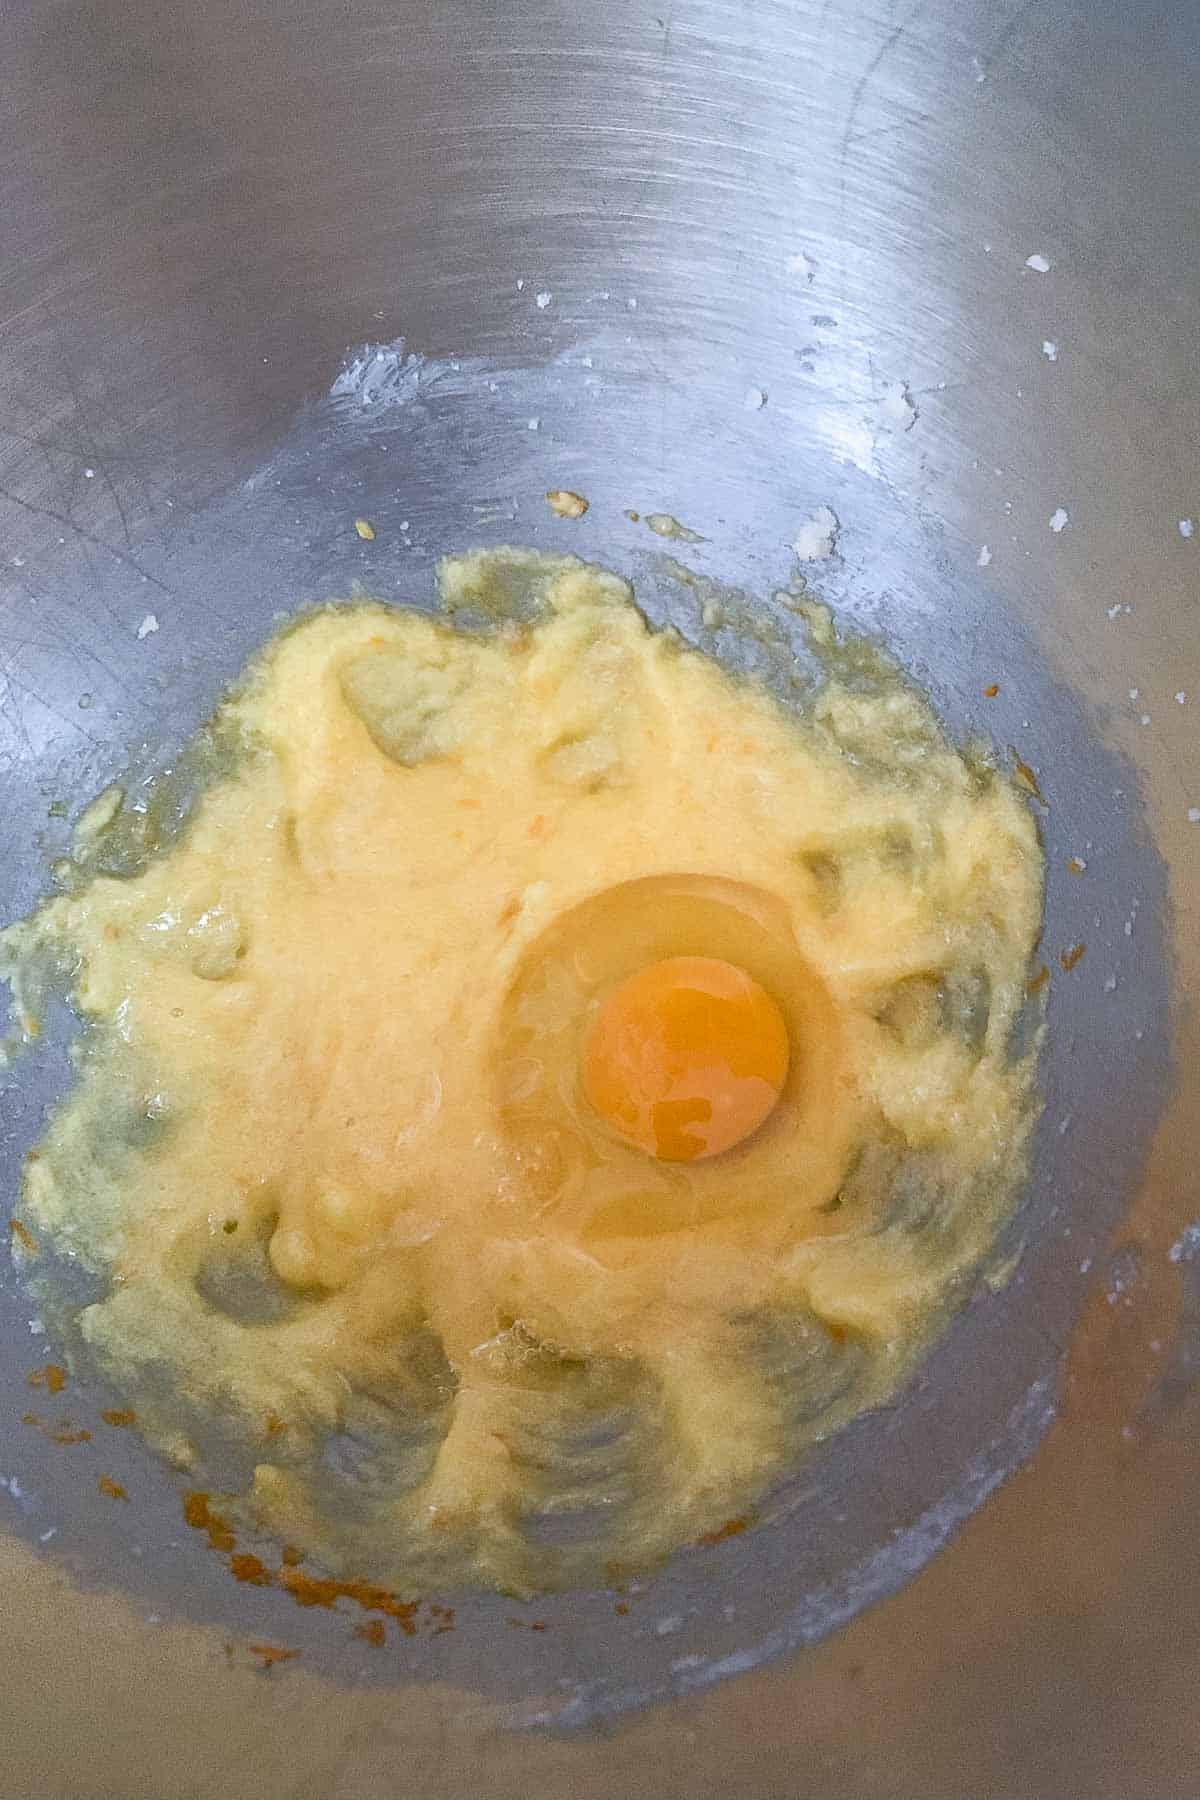 adding egg to muffin batter